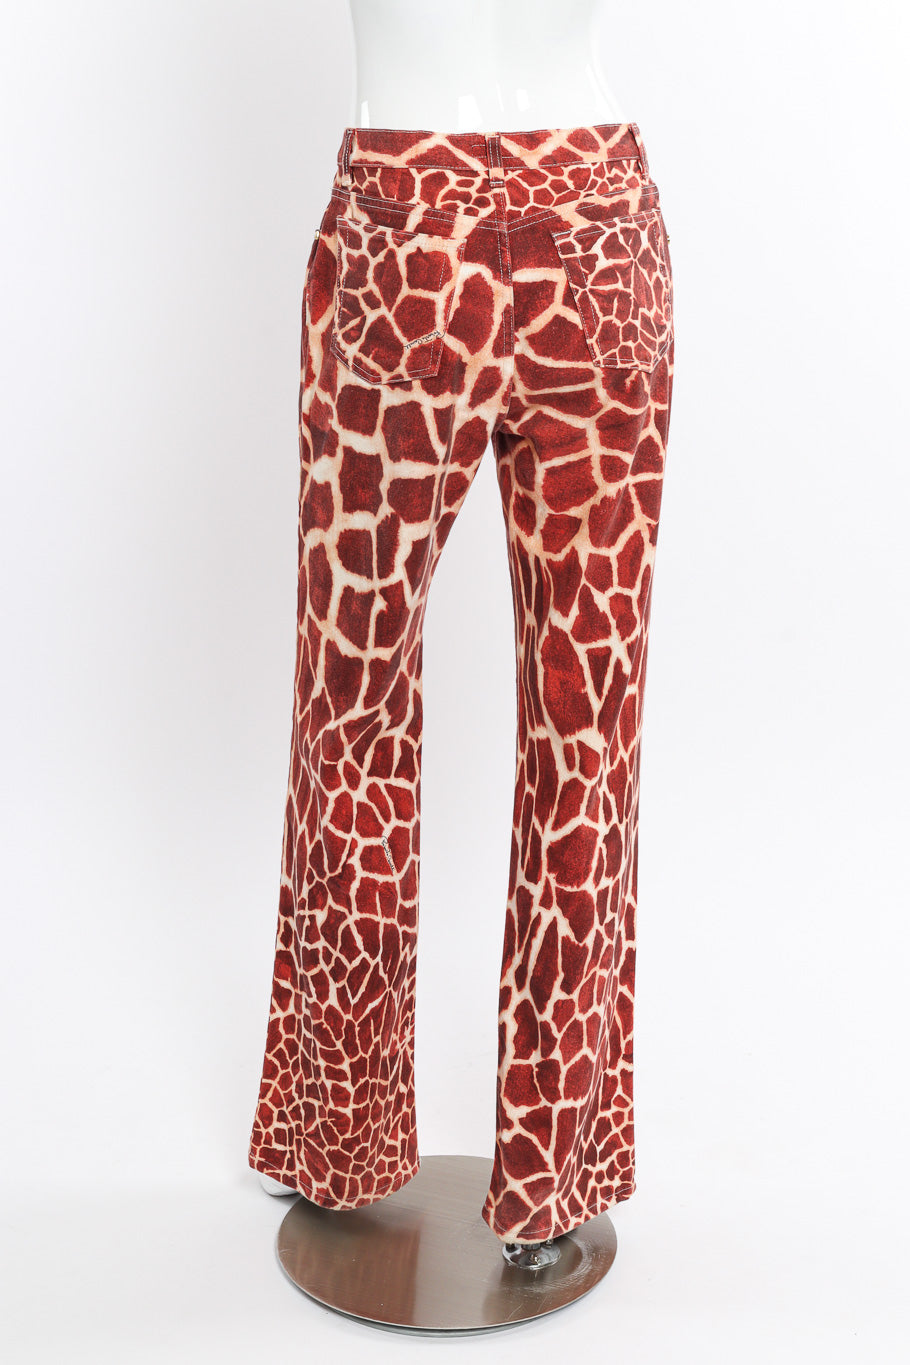 Vintage Roberto Cavalli Giraffe Print Flare Jeans back view on mannequin @Recessla